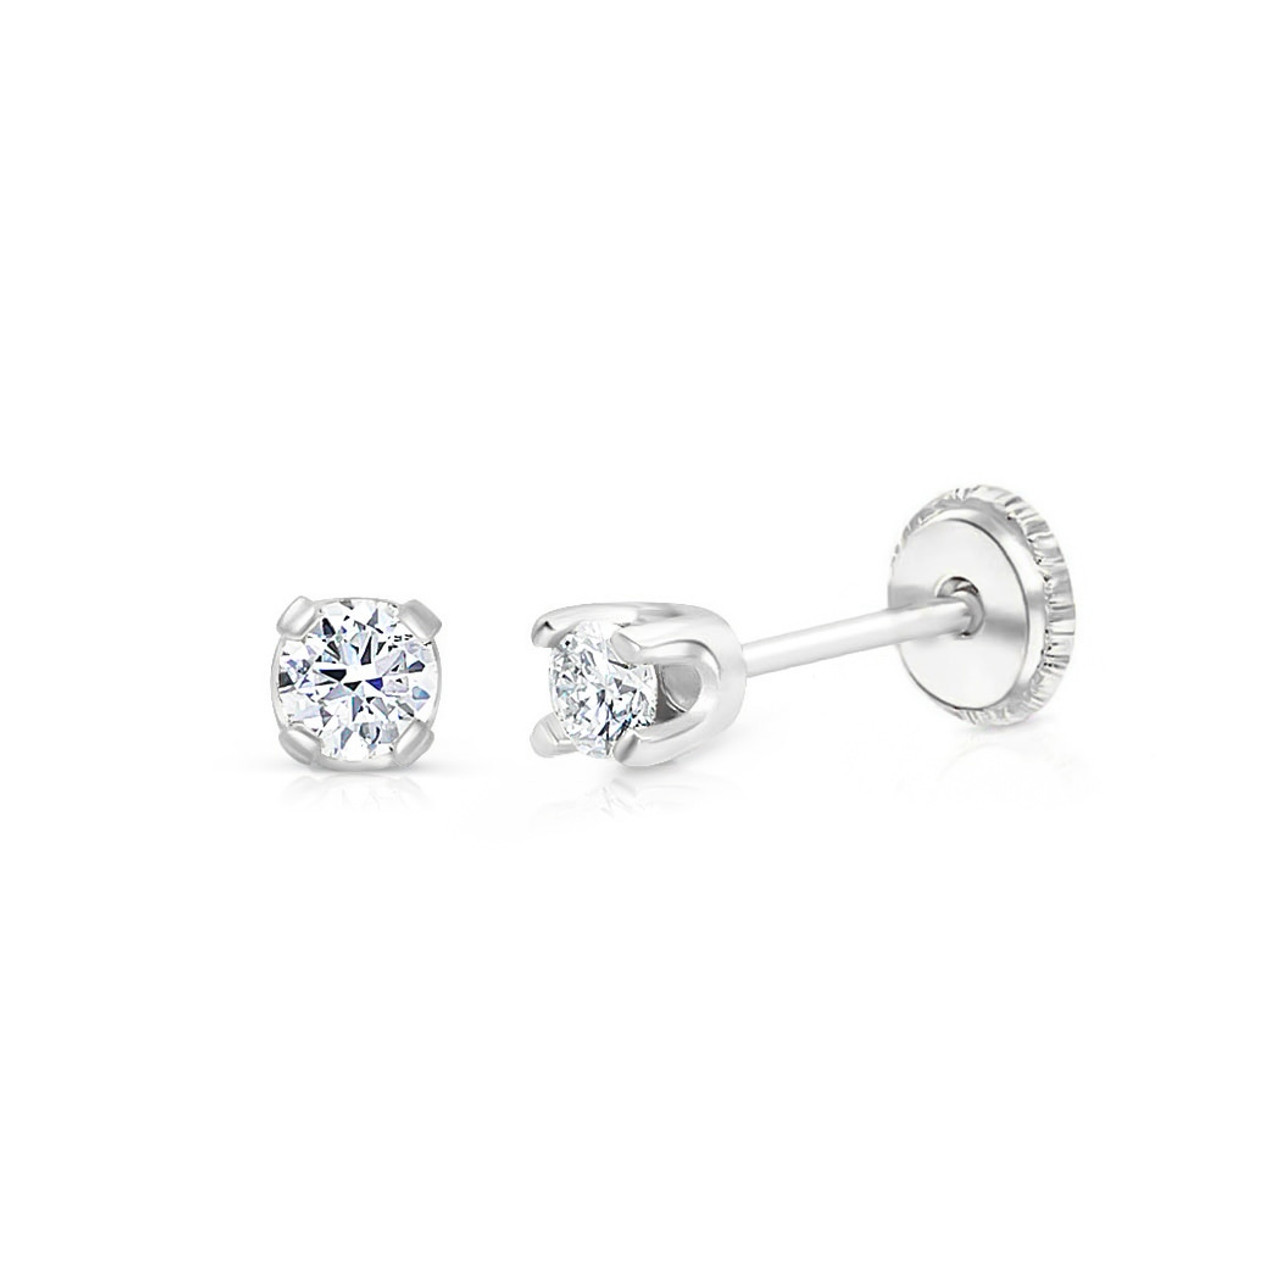 Mesmerizing Radiance Diamond Earrings - Sparkle Jewels